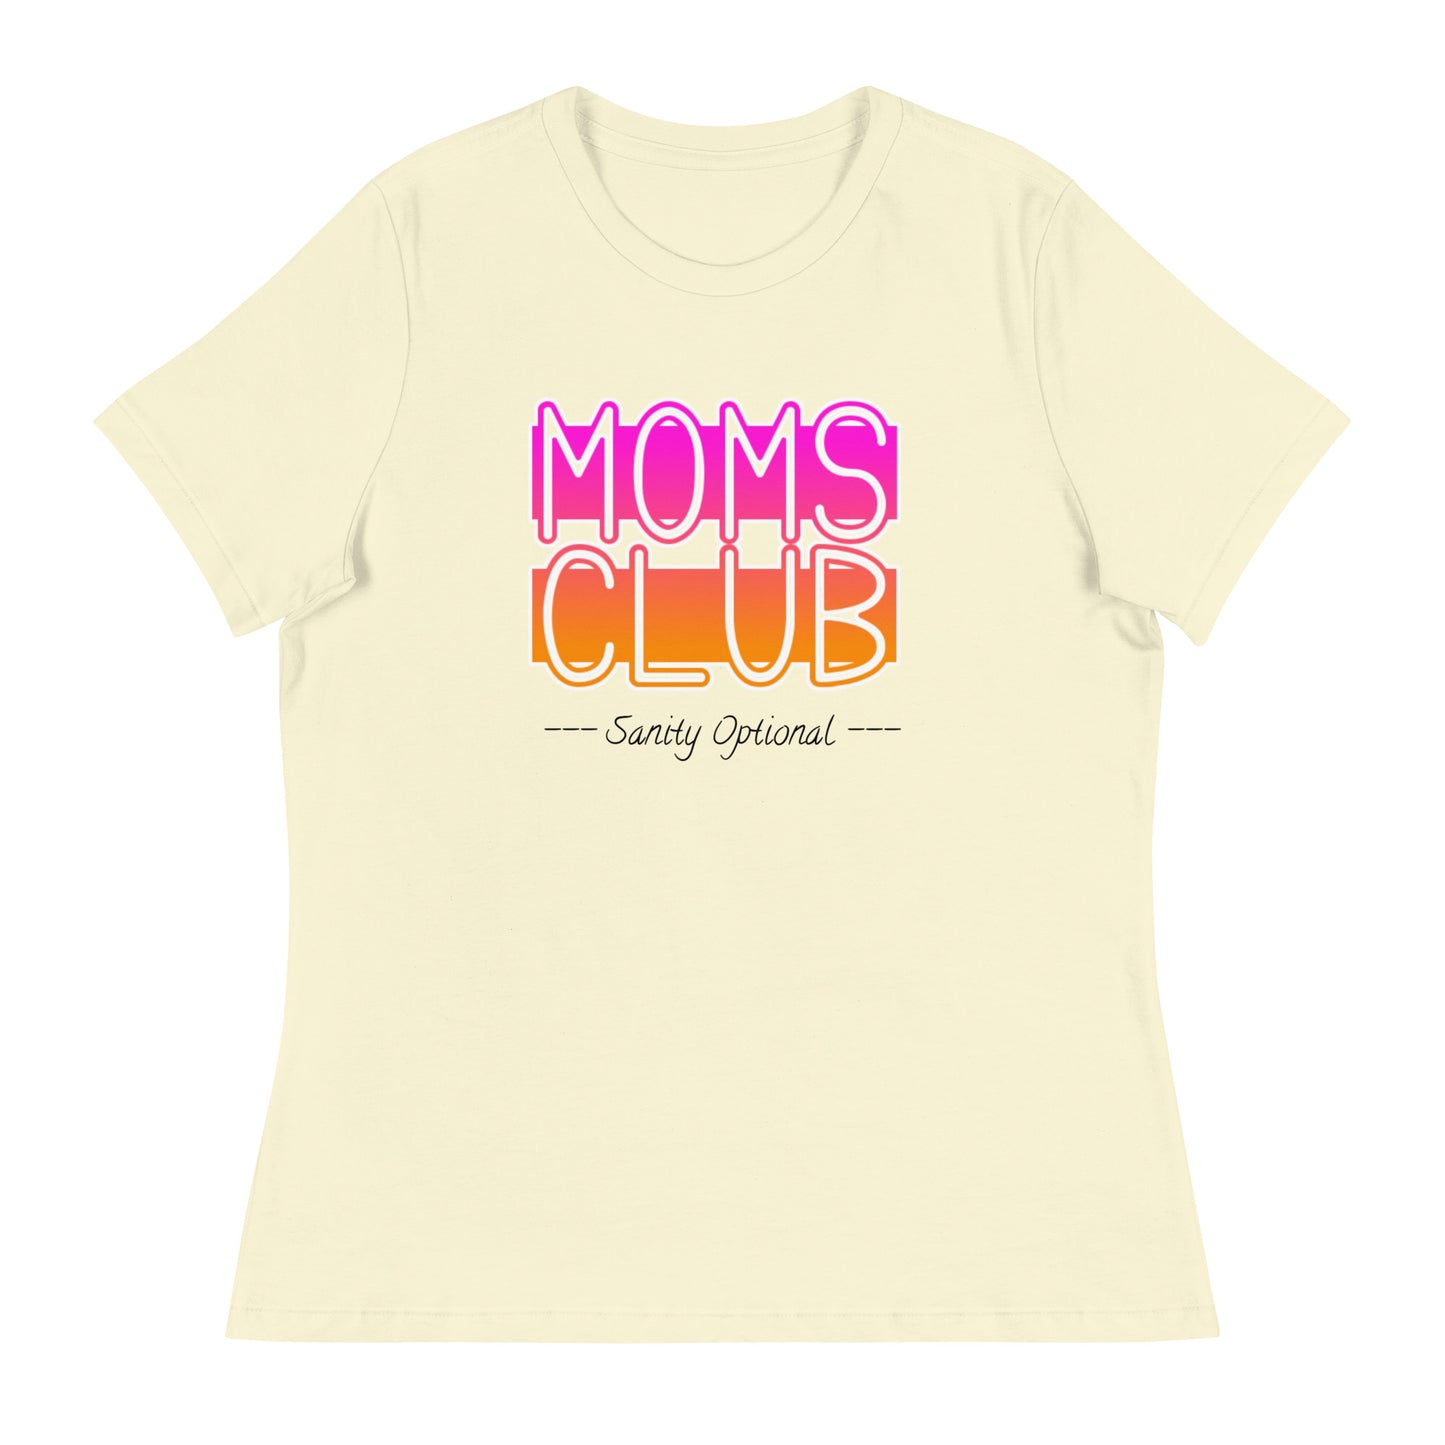 Moms Club -Sanity Optional Women's T-Shirt